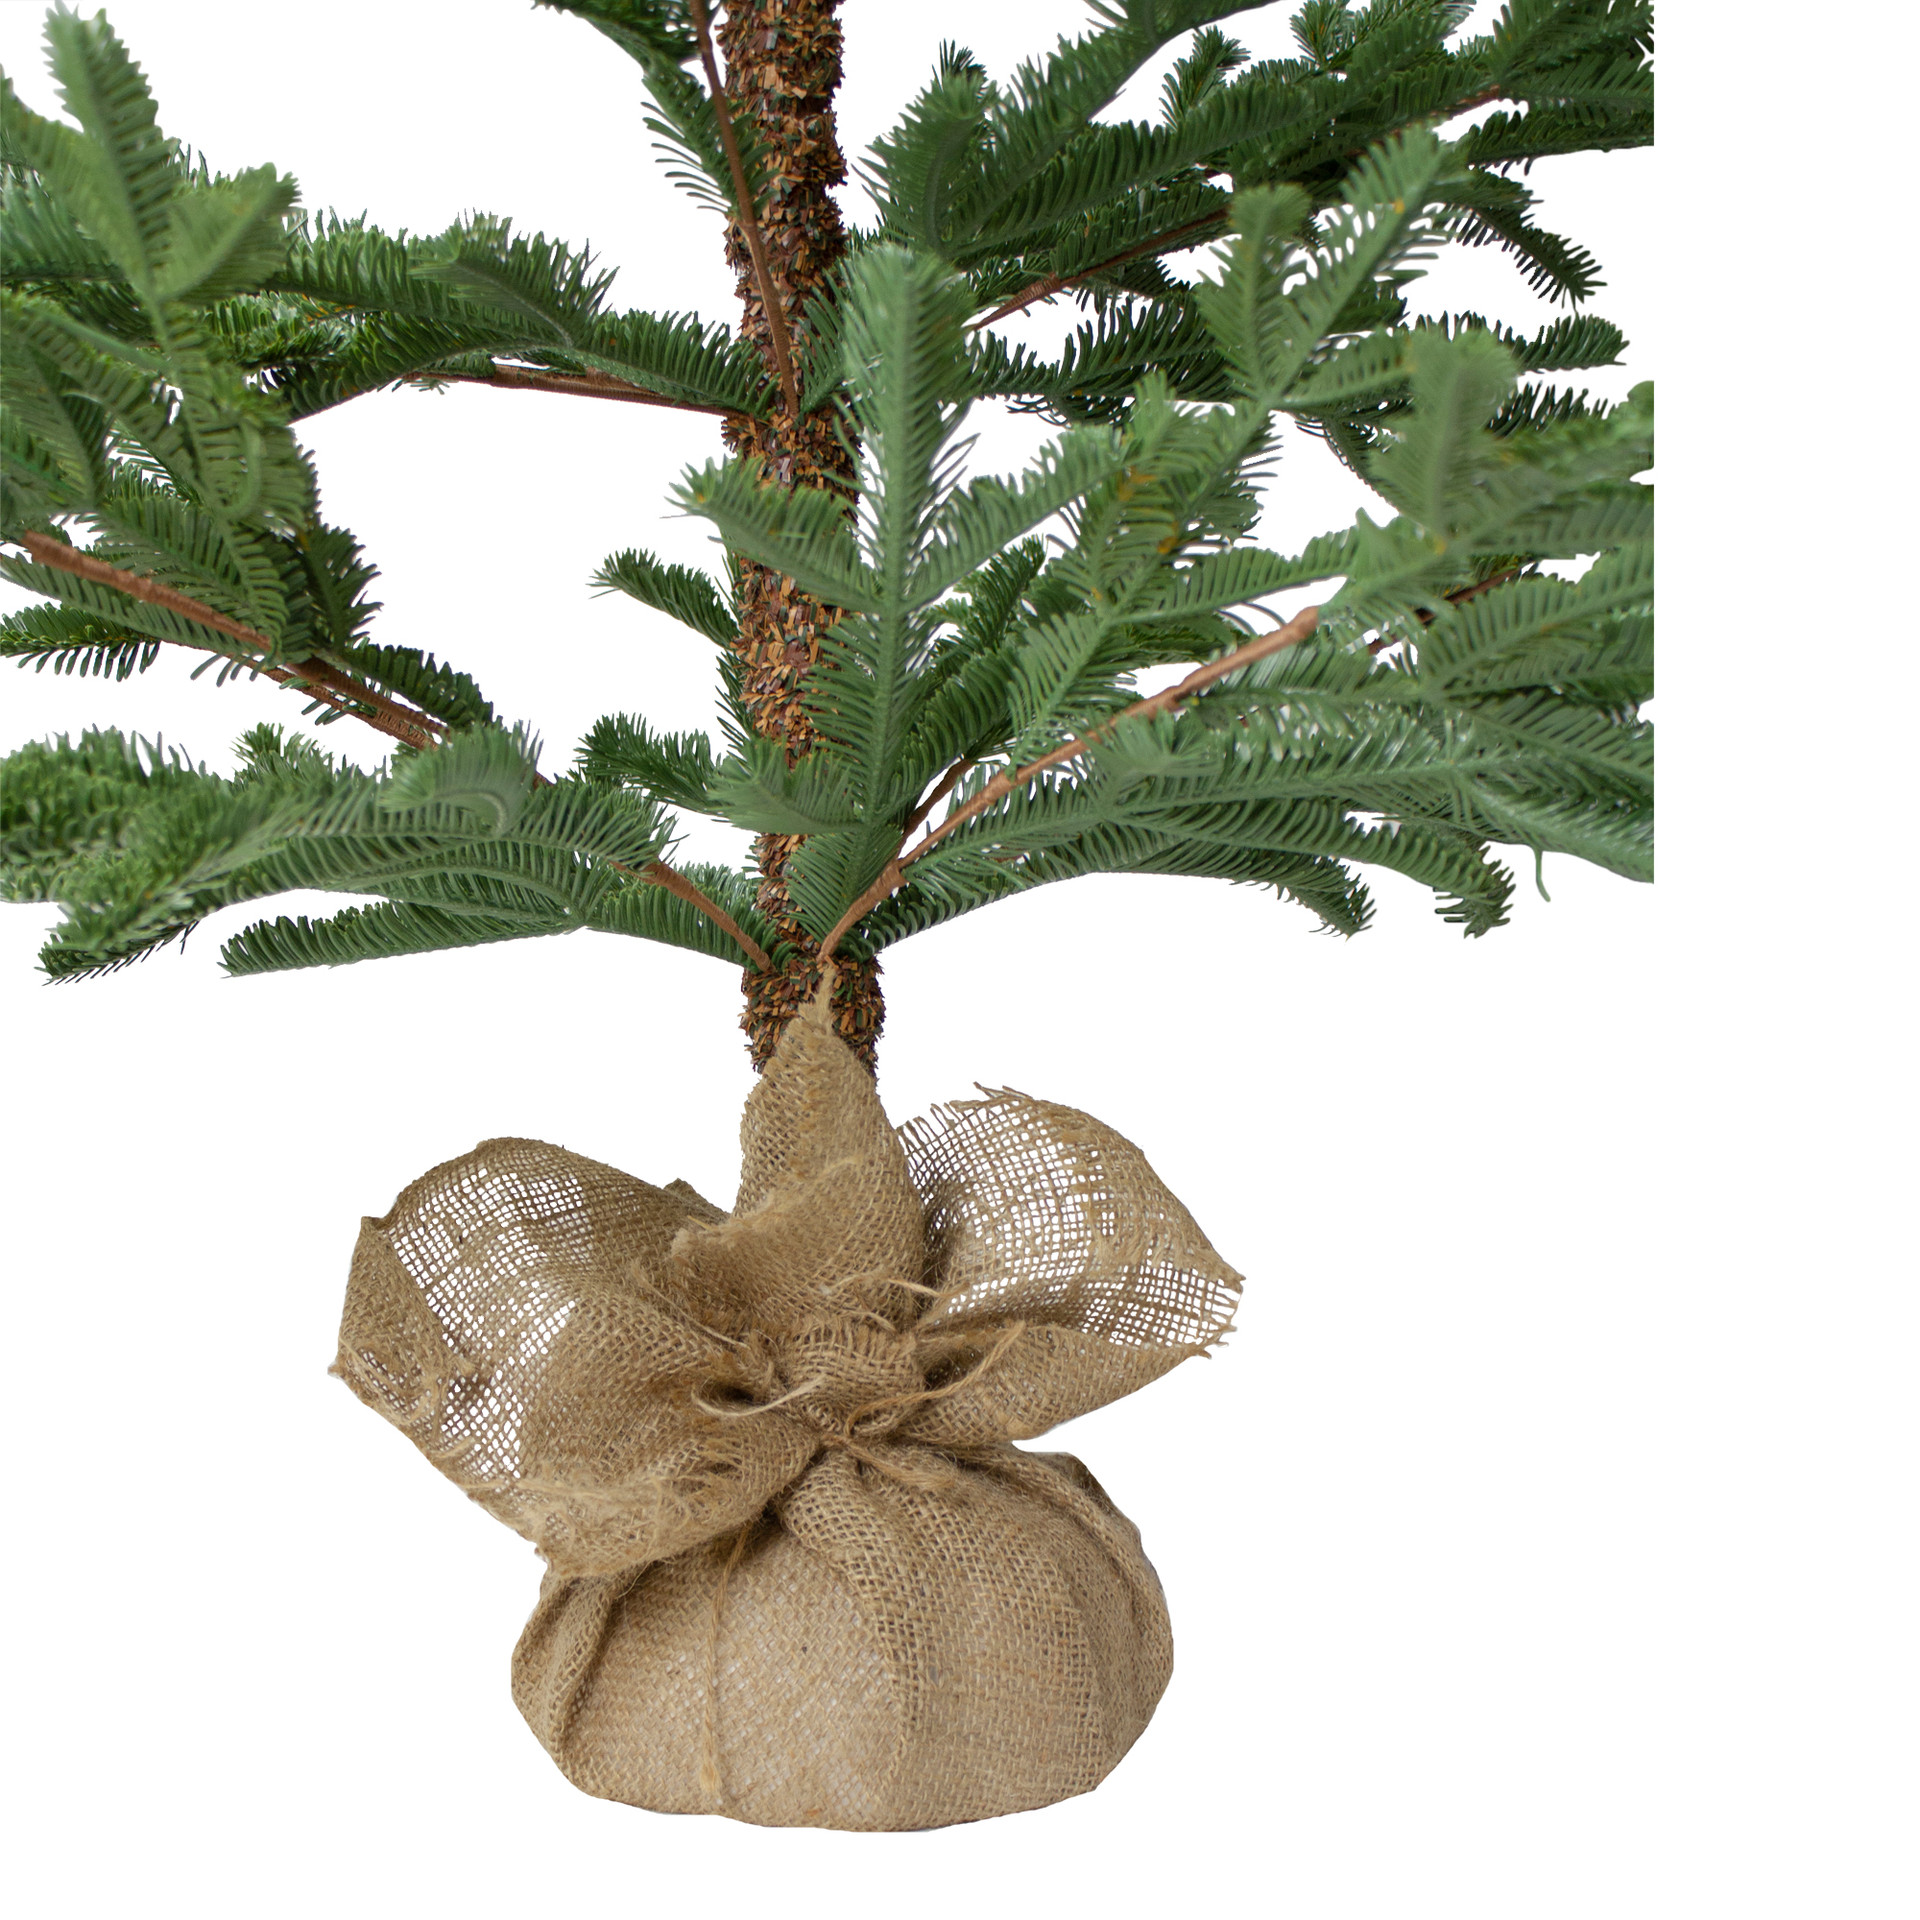 5' Green Ponderosa Pine Artificial Christmas Tree with Jute Base- Unlit ...